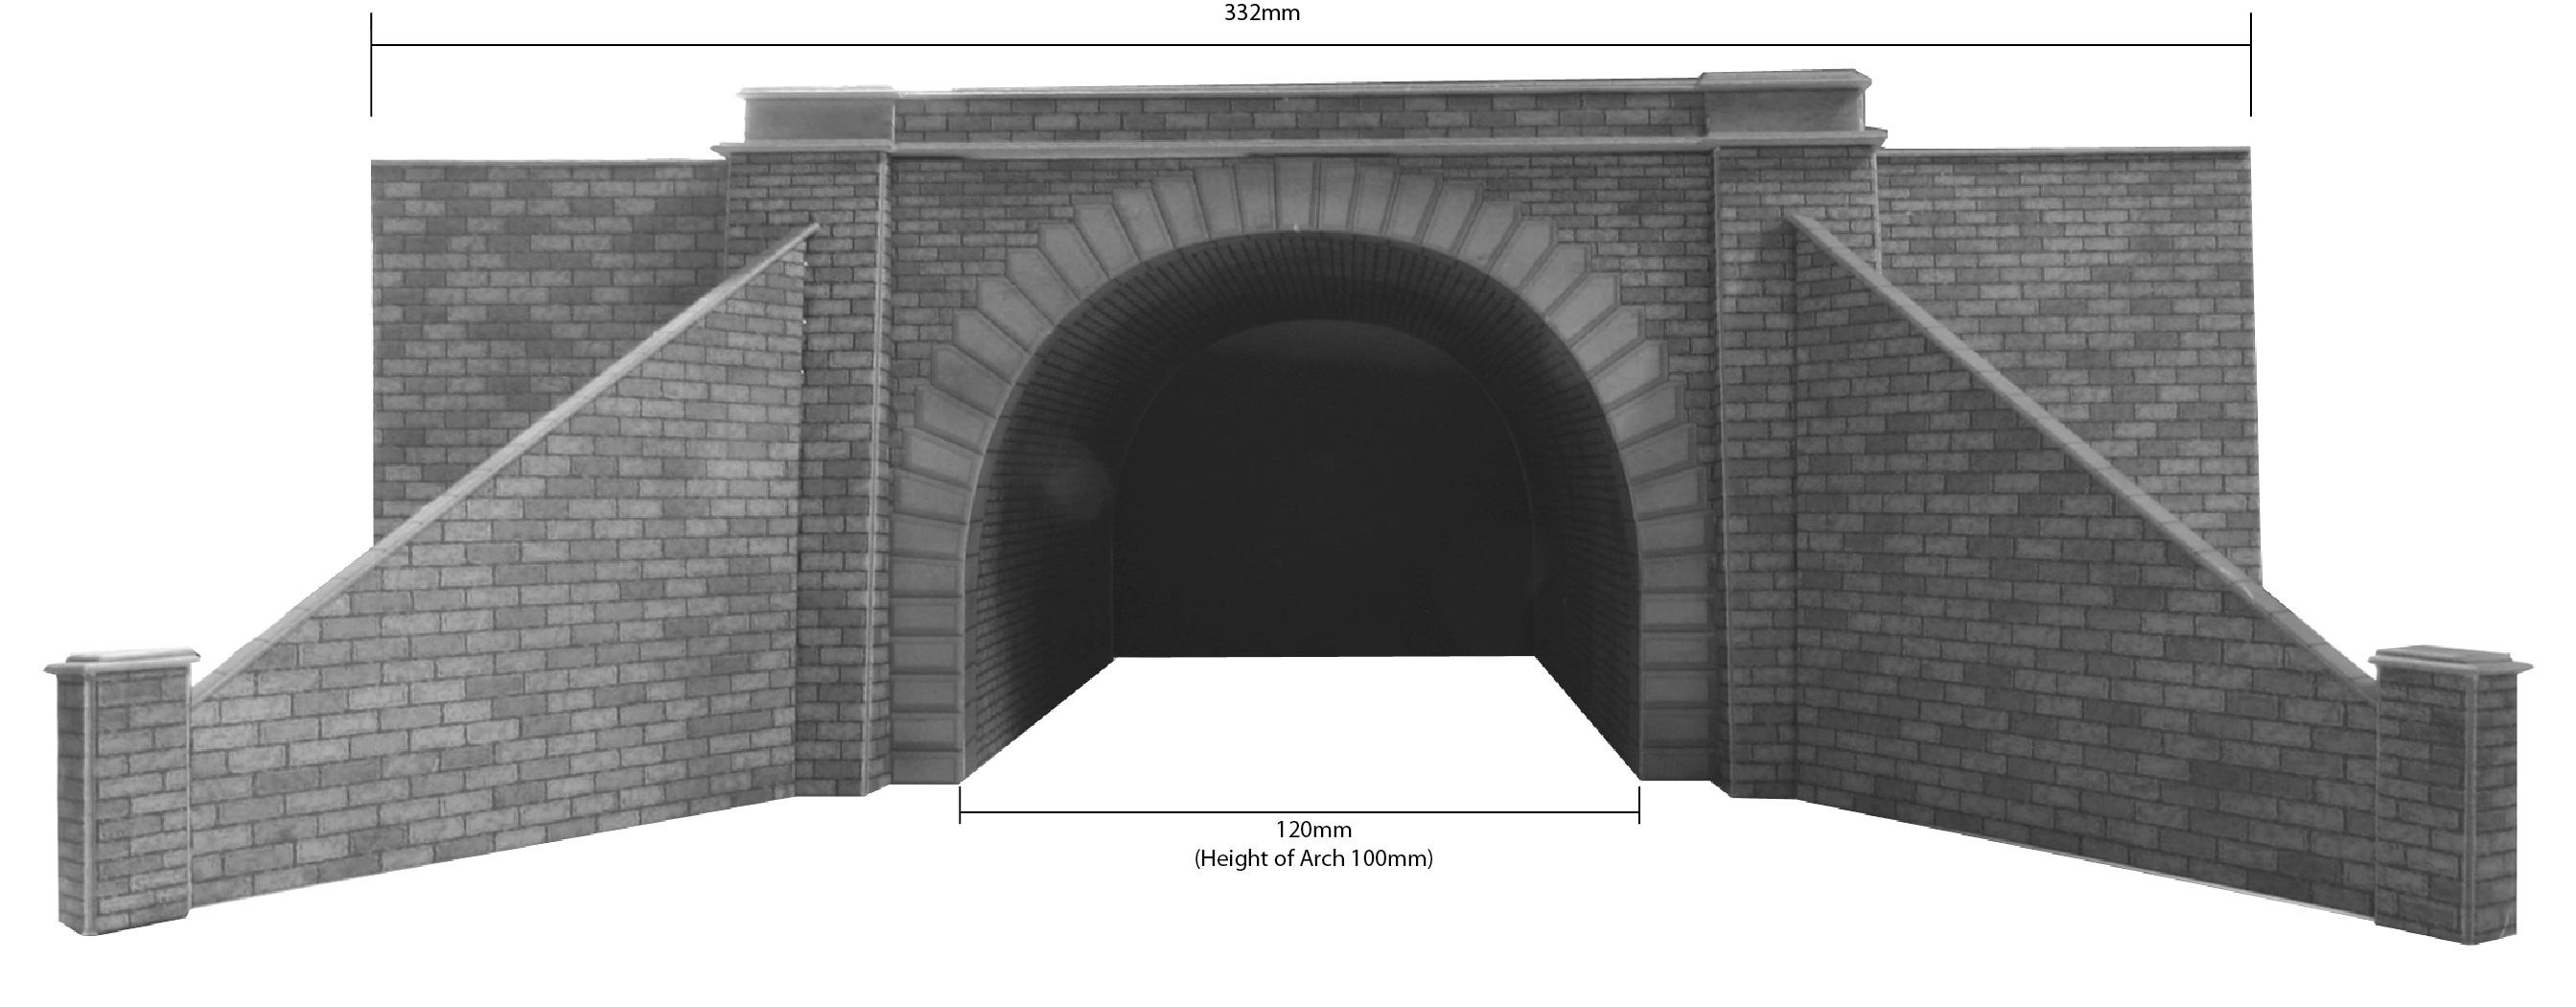 BNIB OO Gauge Metcalfe Model Railway Kit Double Track Tunnel Entrances PO242